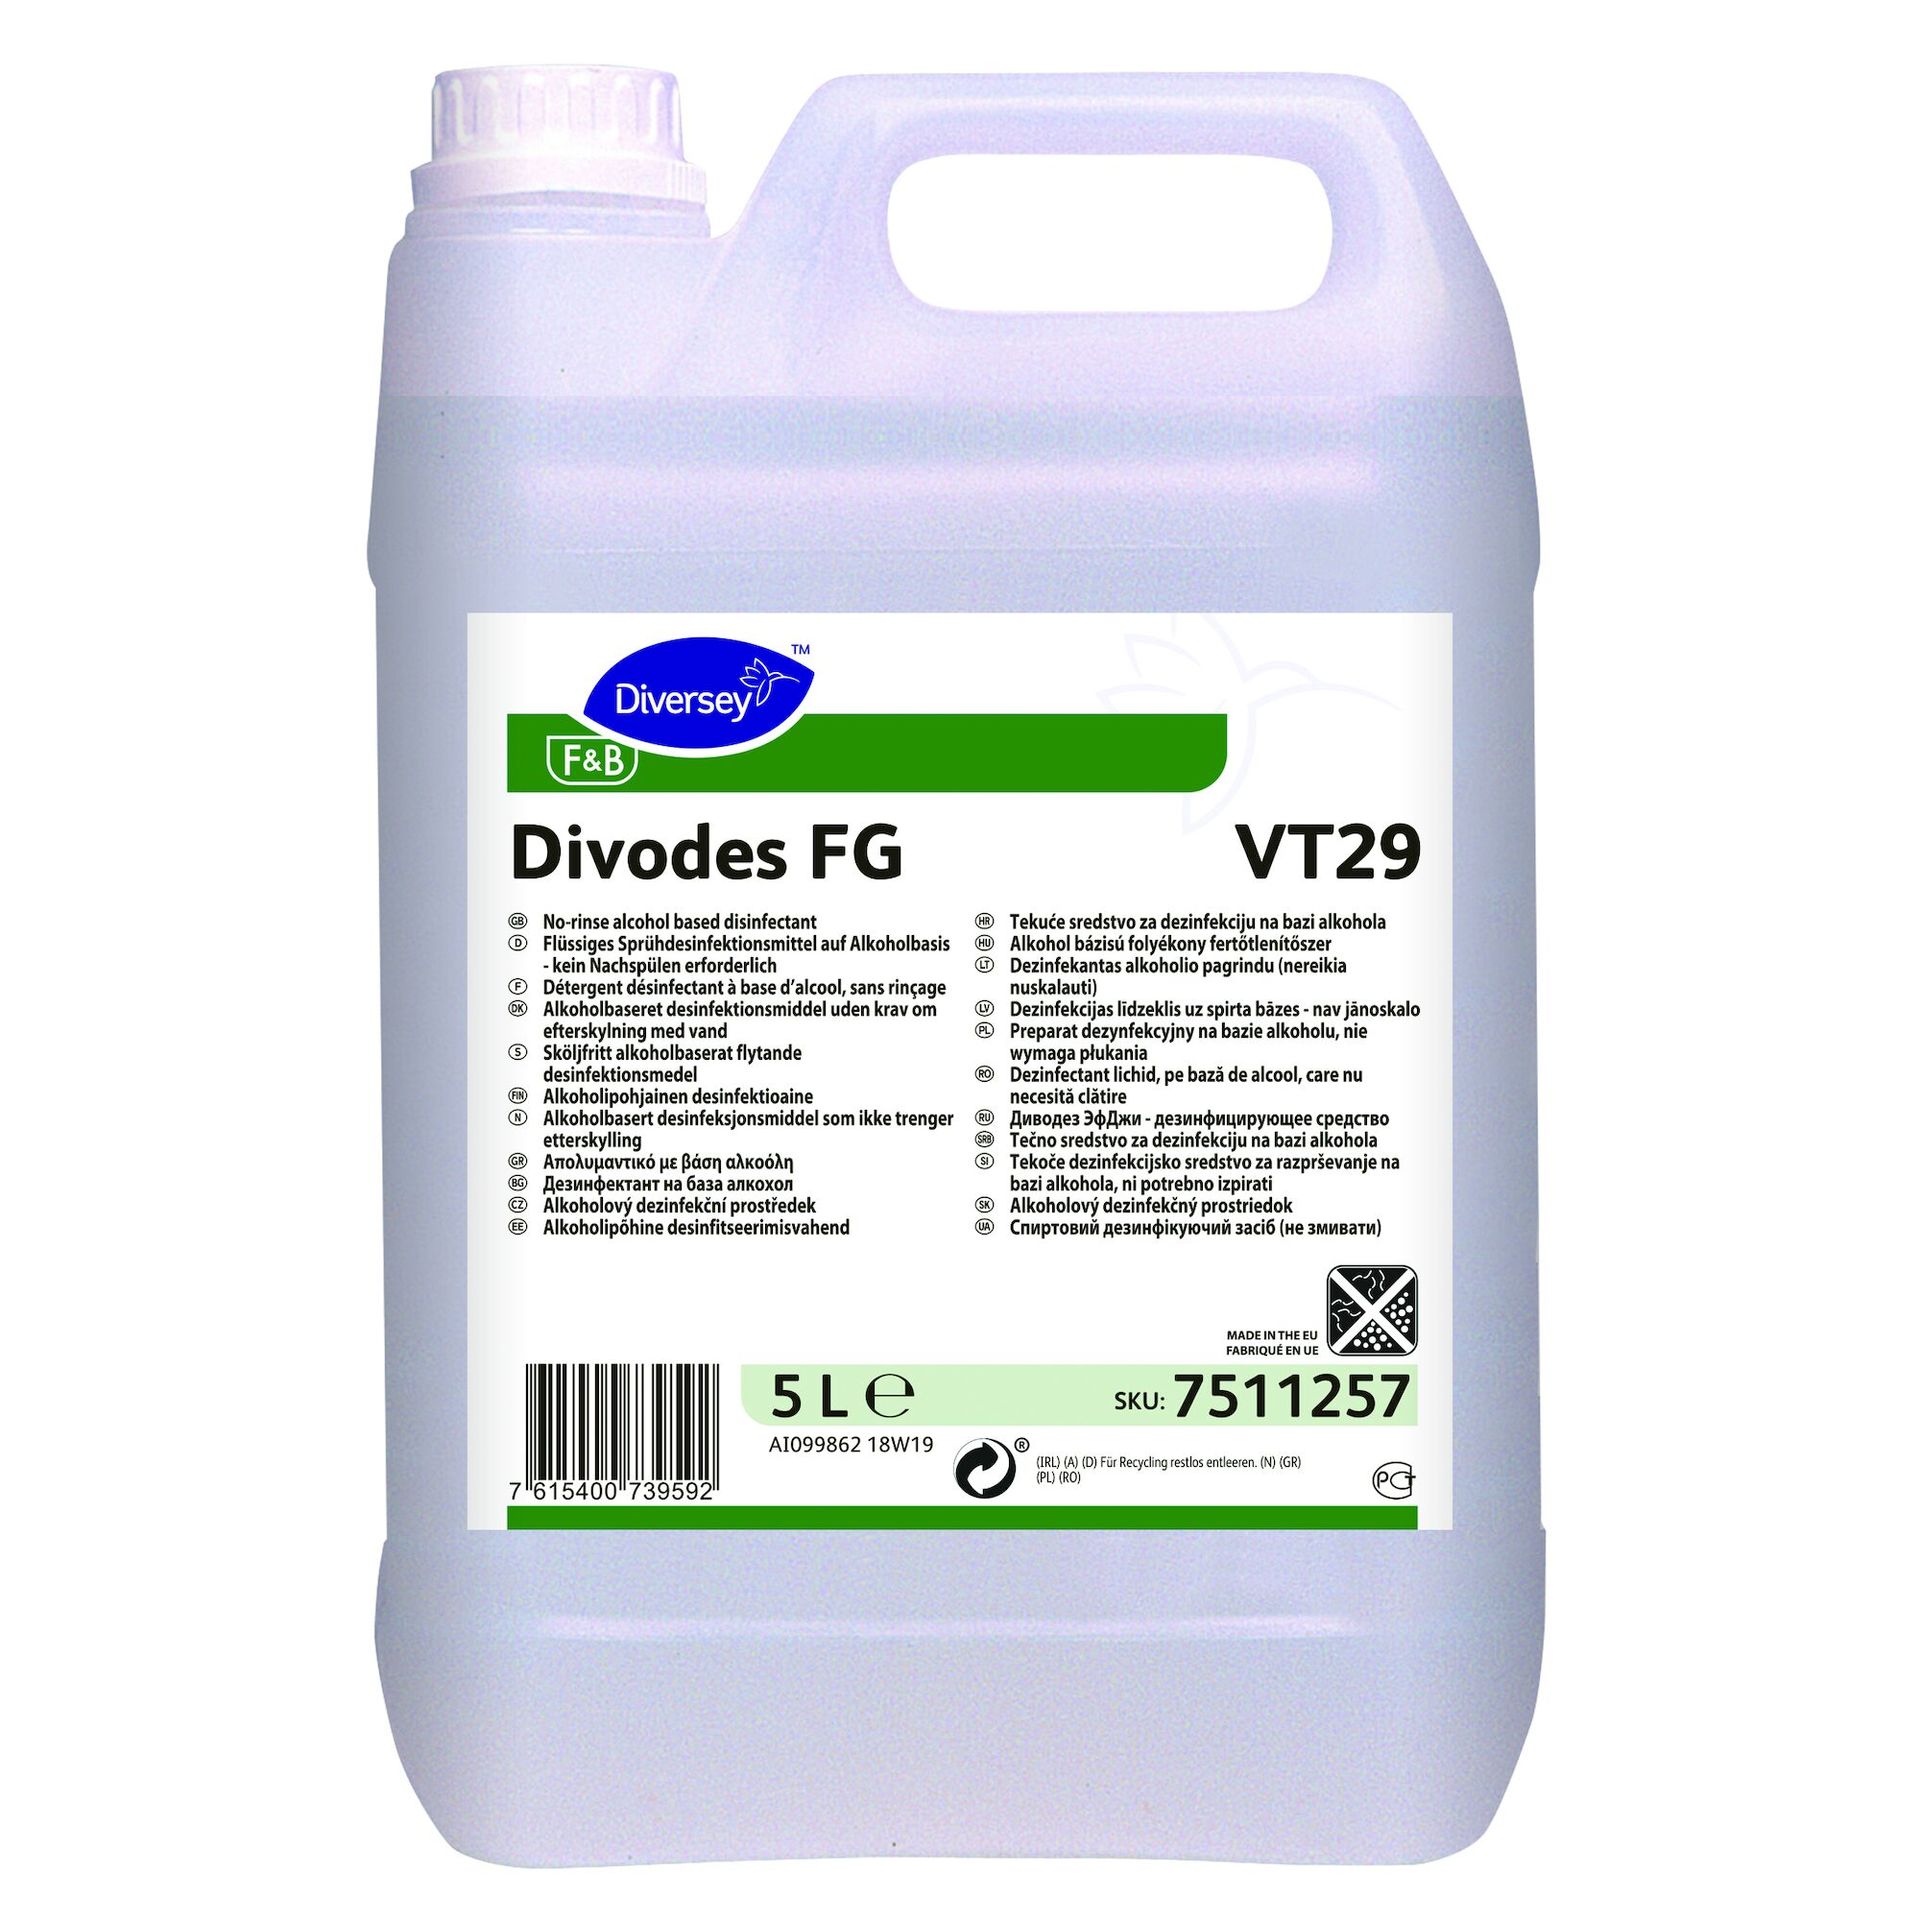 Diversey Divodes FG VT29 5L